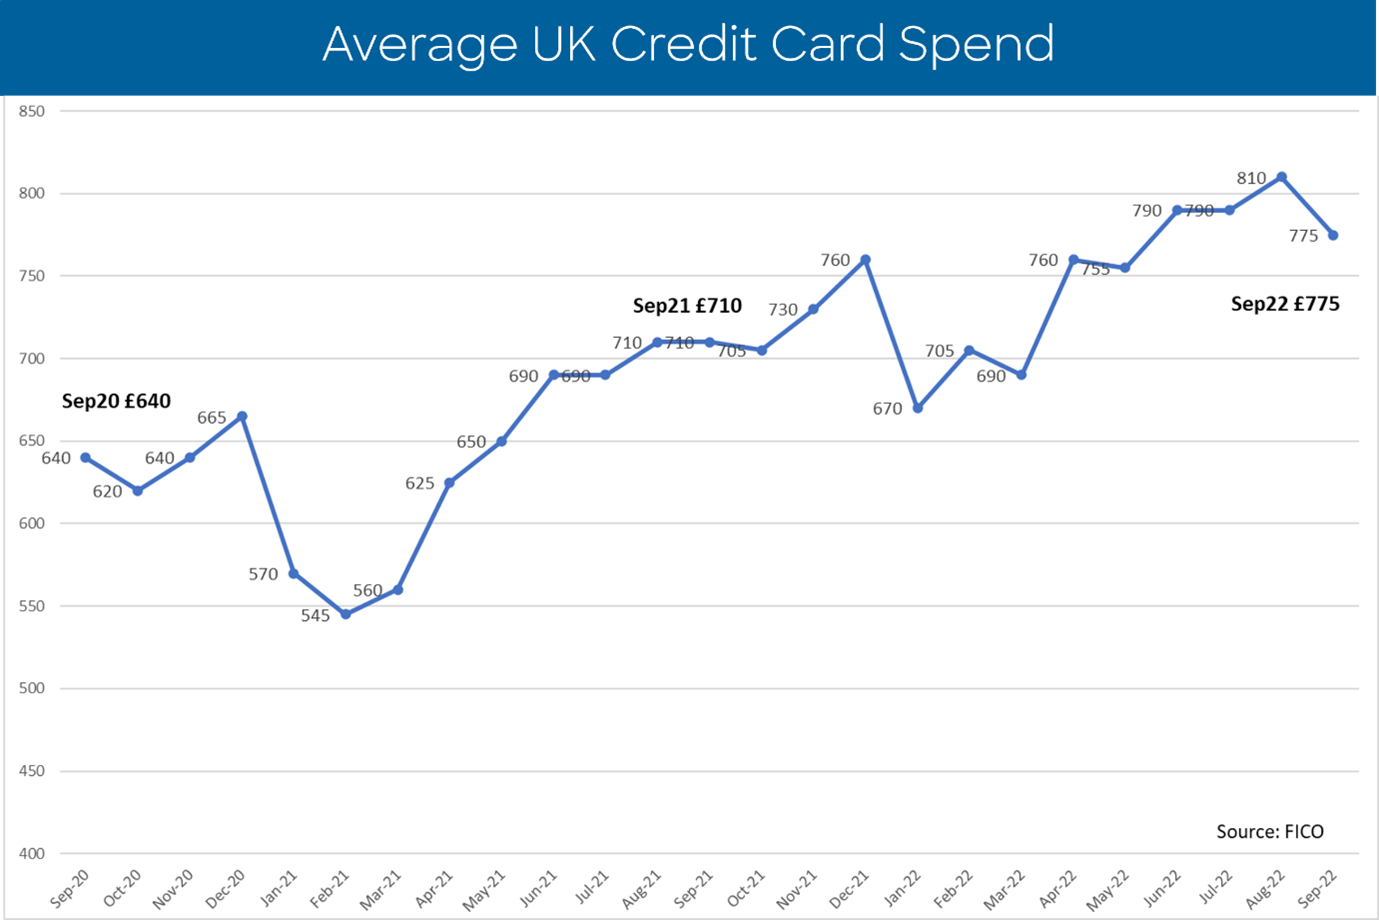 UK Card Trends